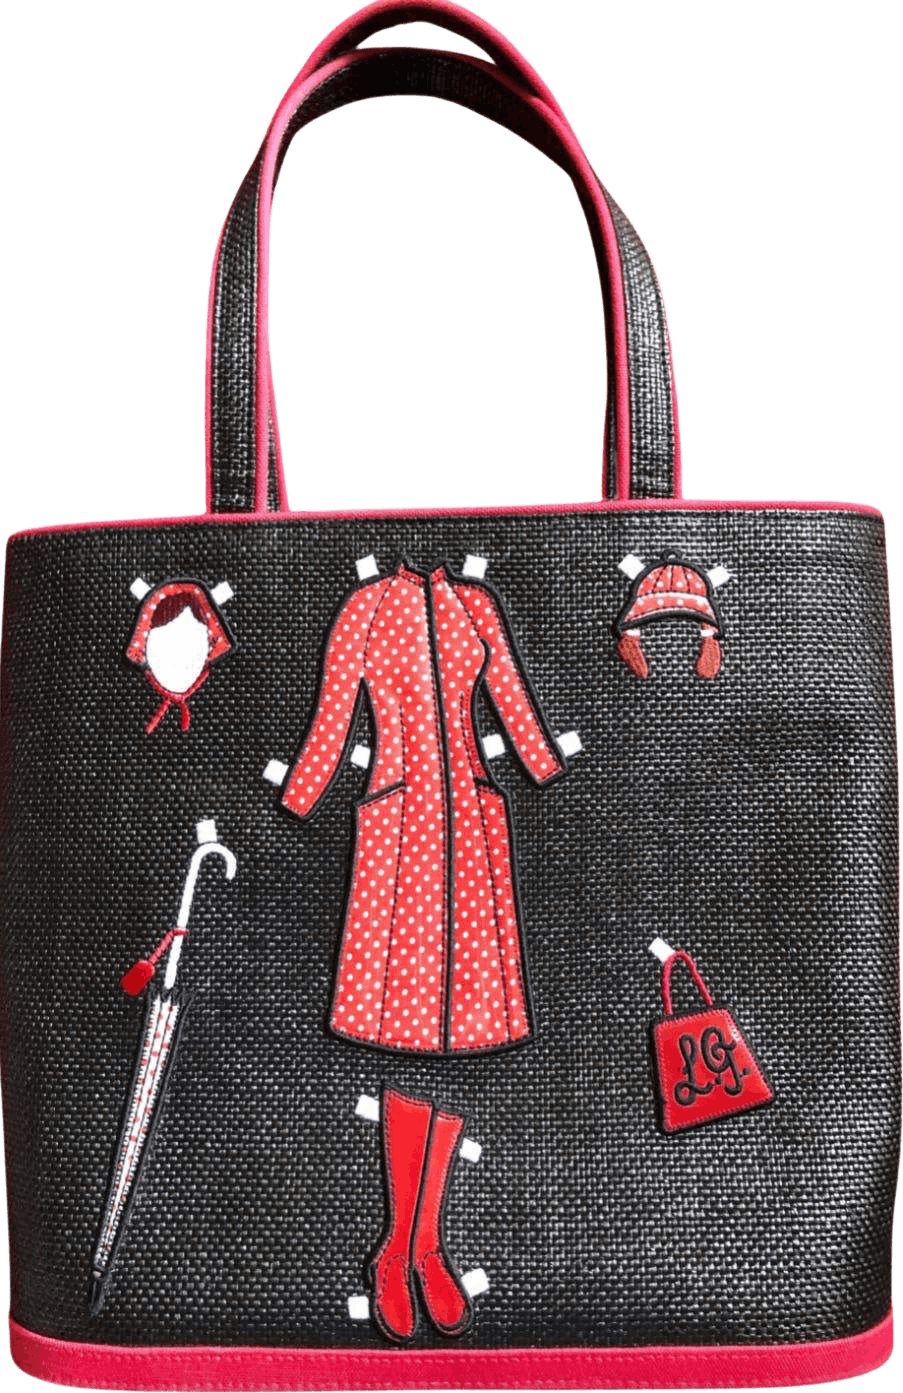 NEW WITH TAGS Red Lulu by Lulu Guinness crossbody purse CUTE! | eBay